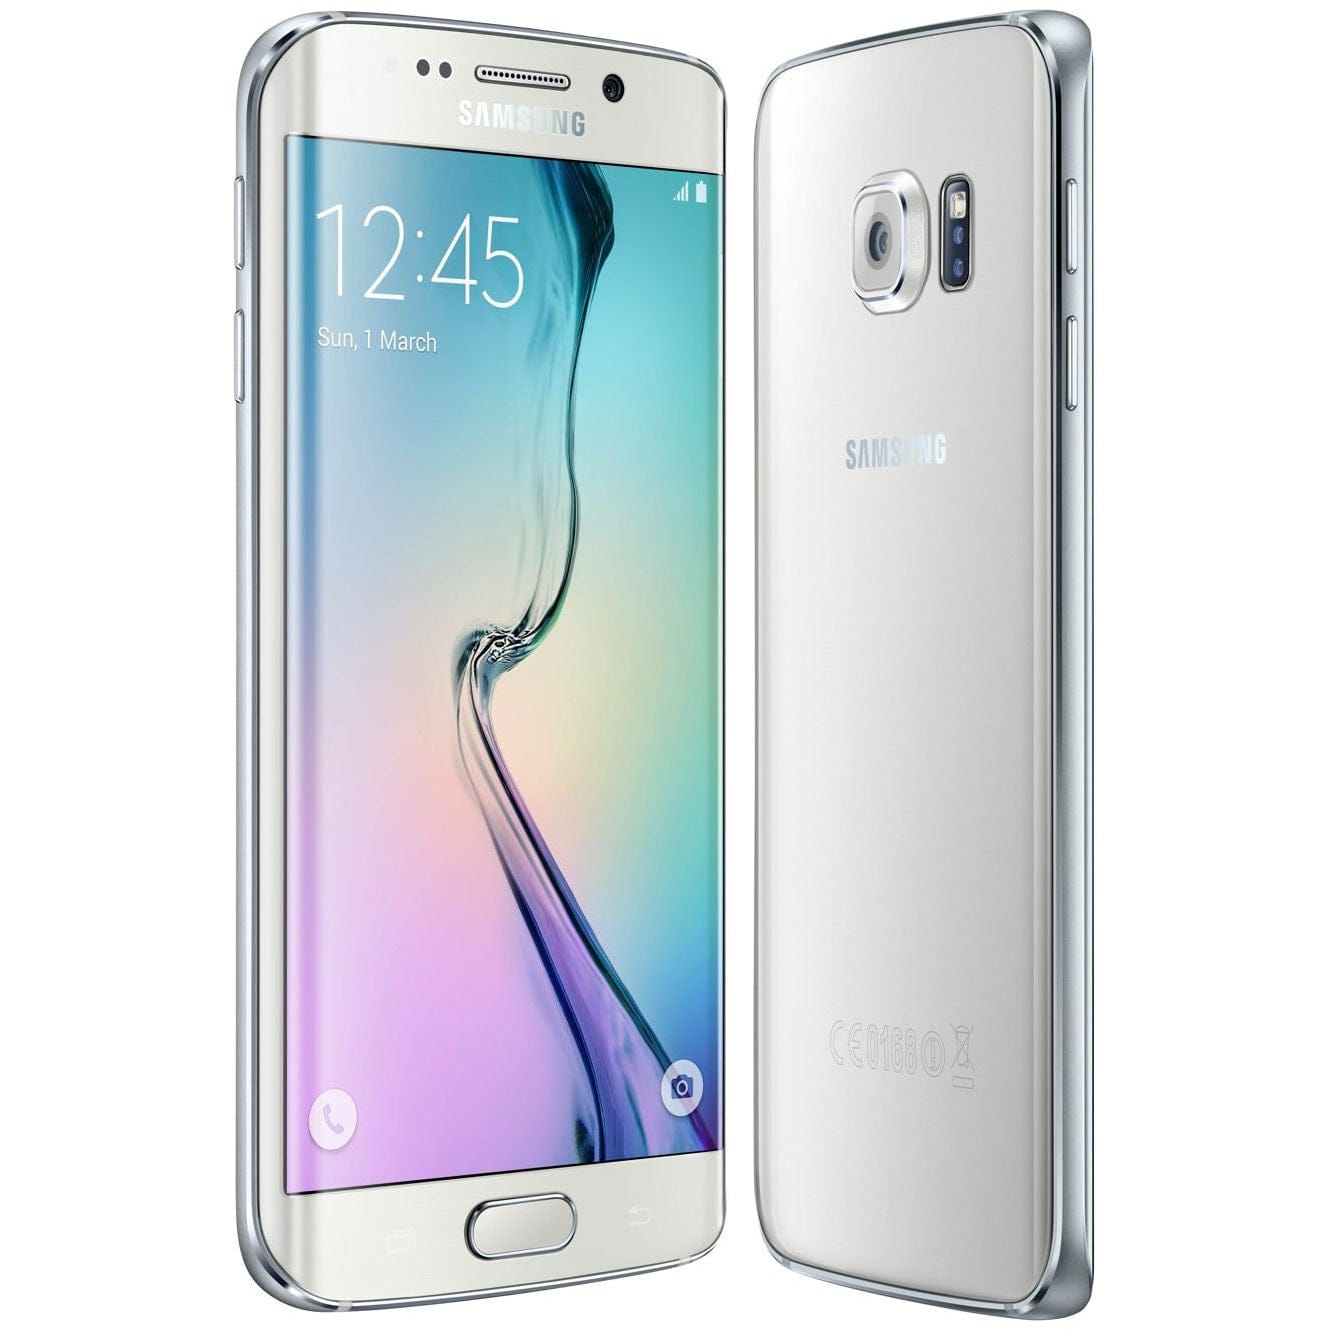 Samsung Galaxy S6 edge SMG925i - 64 GB - White Pearl - Unlocked